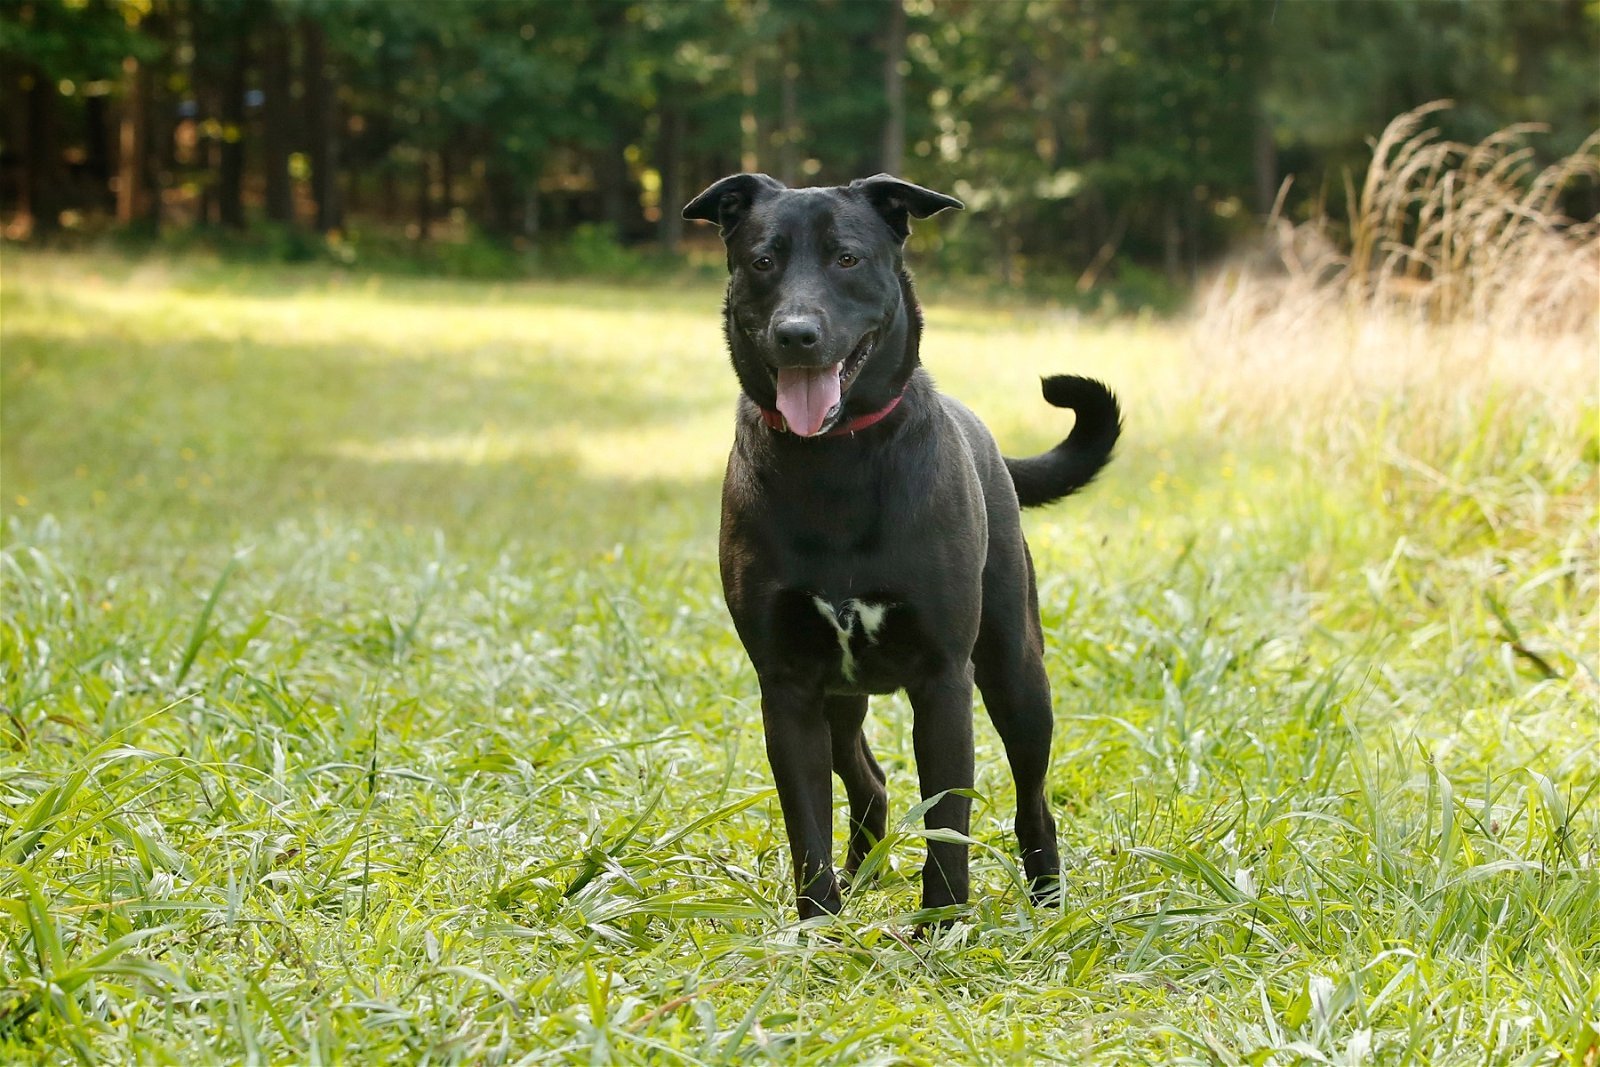 Lady, an adoptable Labrador Retriever in Stafford, VA, 22554 | Photo Image 1